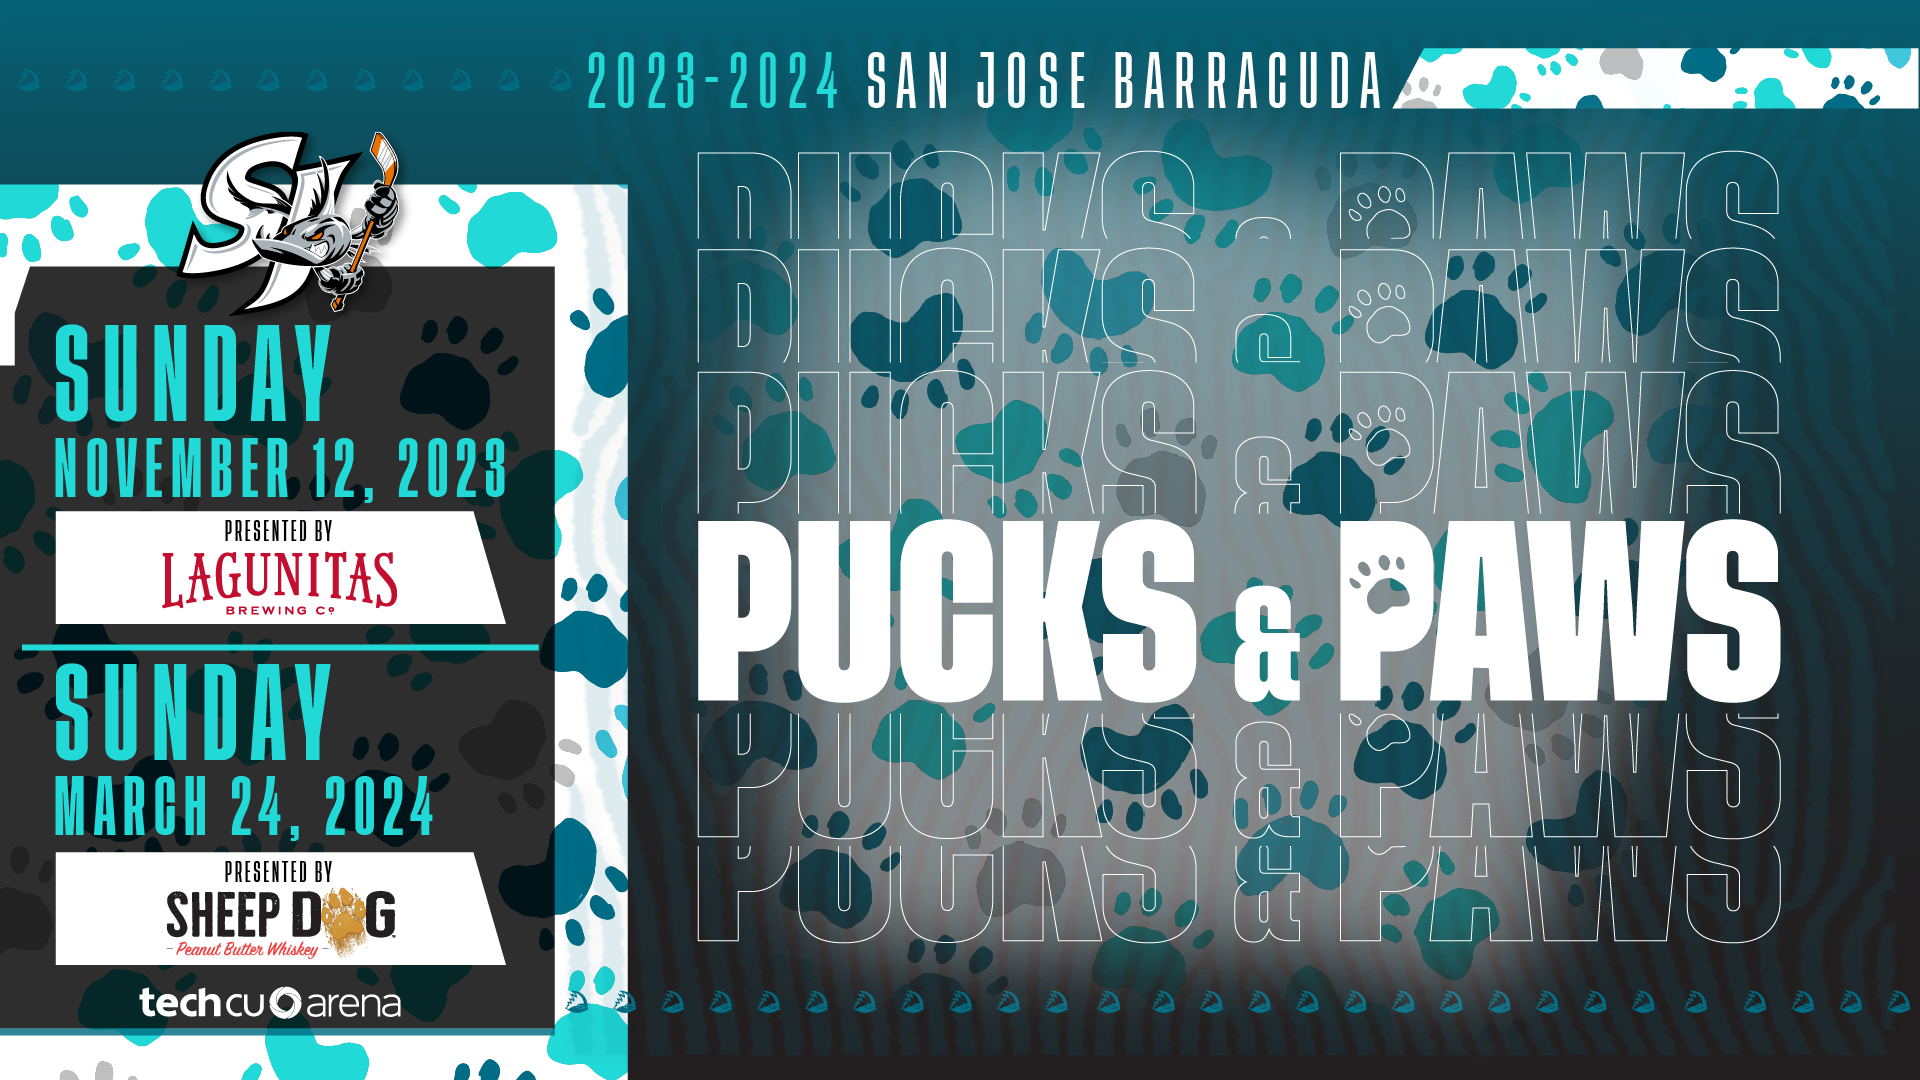 San Jose Barracuda's amazing Pucks and Paws night features dog